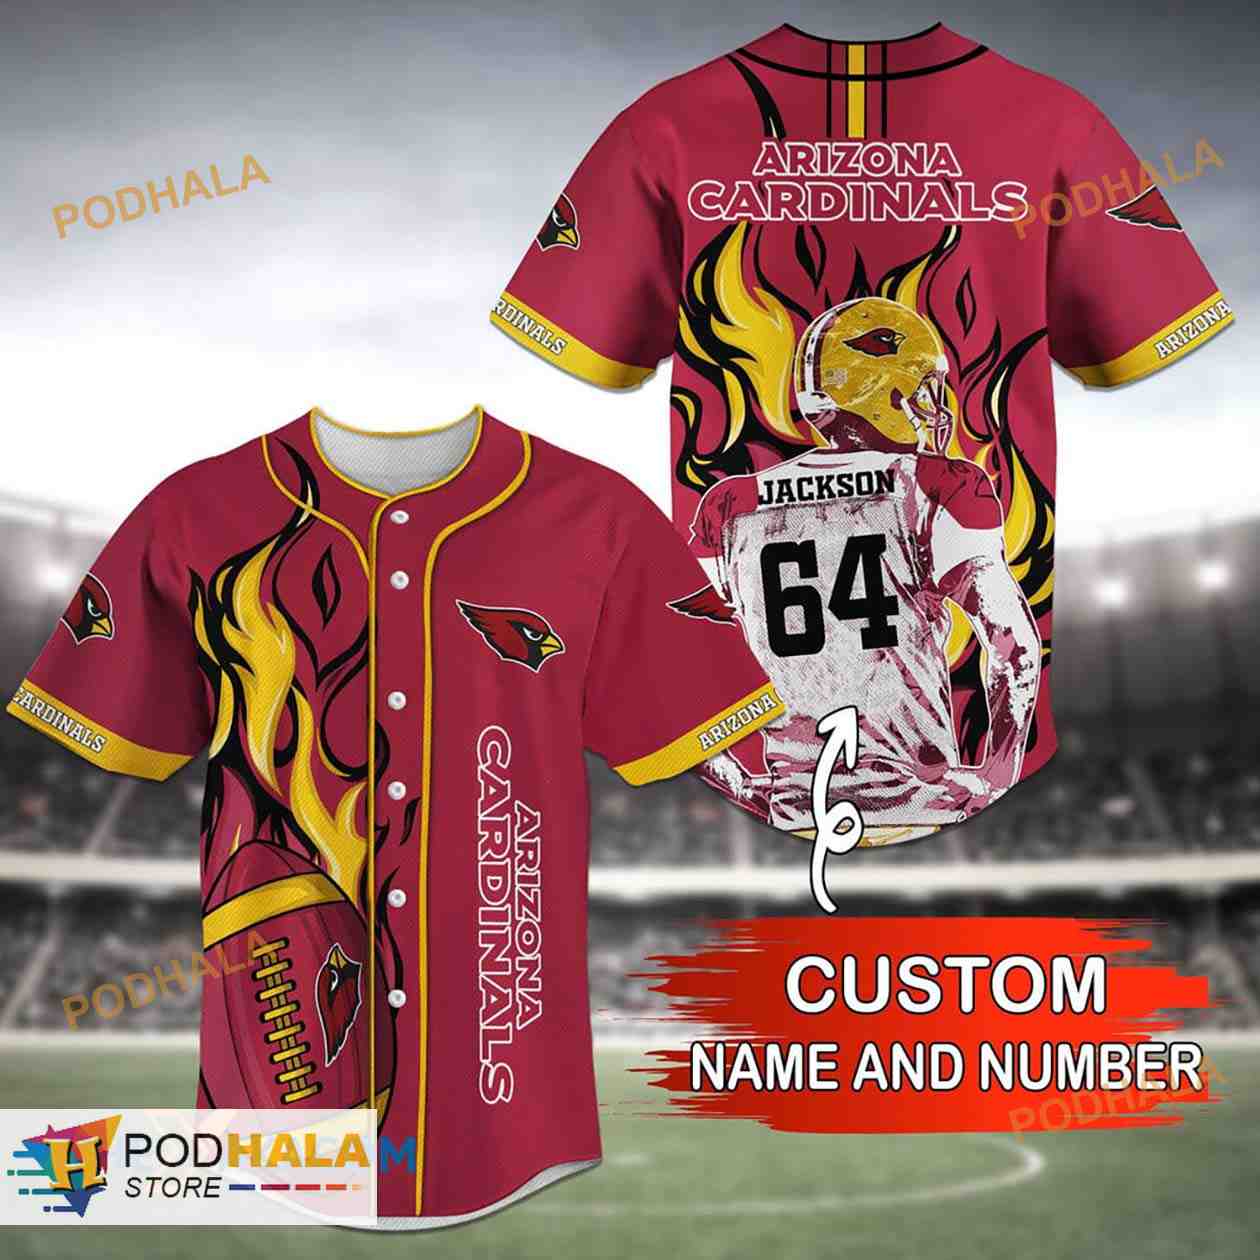 Arizona Cardinals jersey merchandise